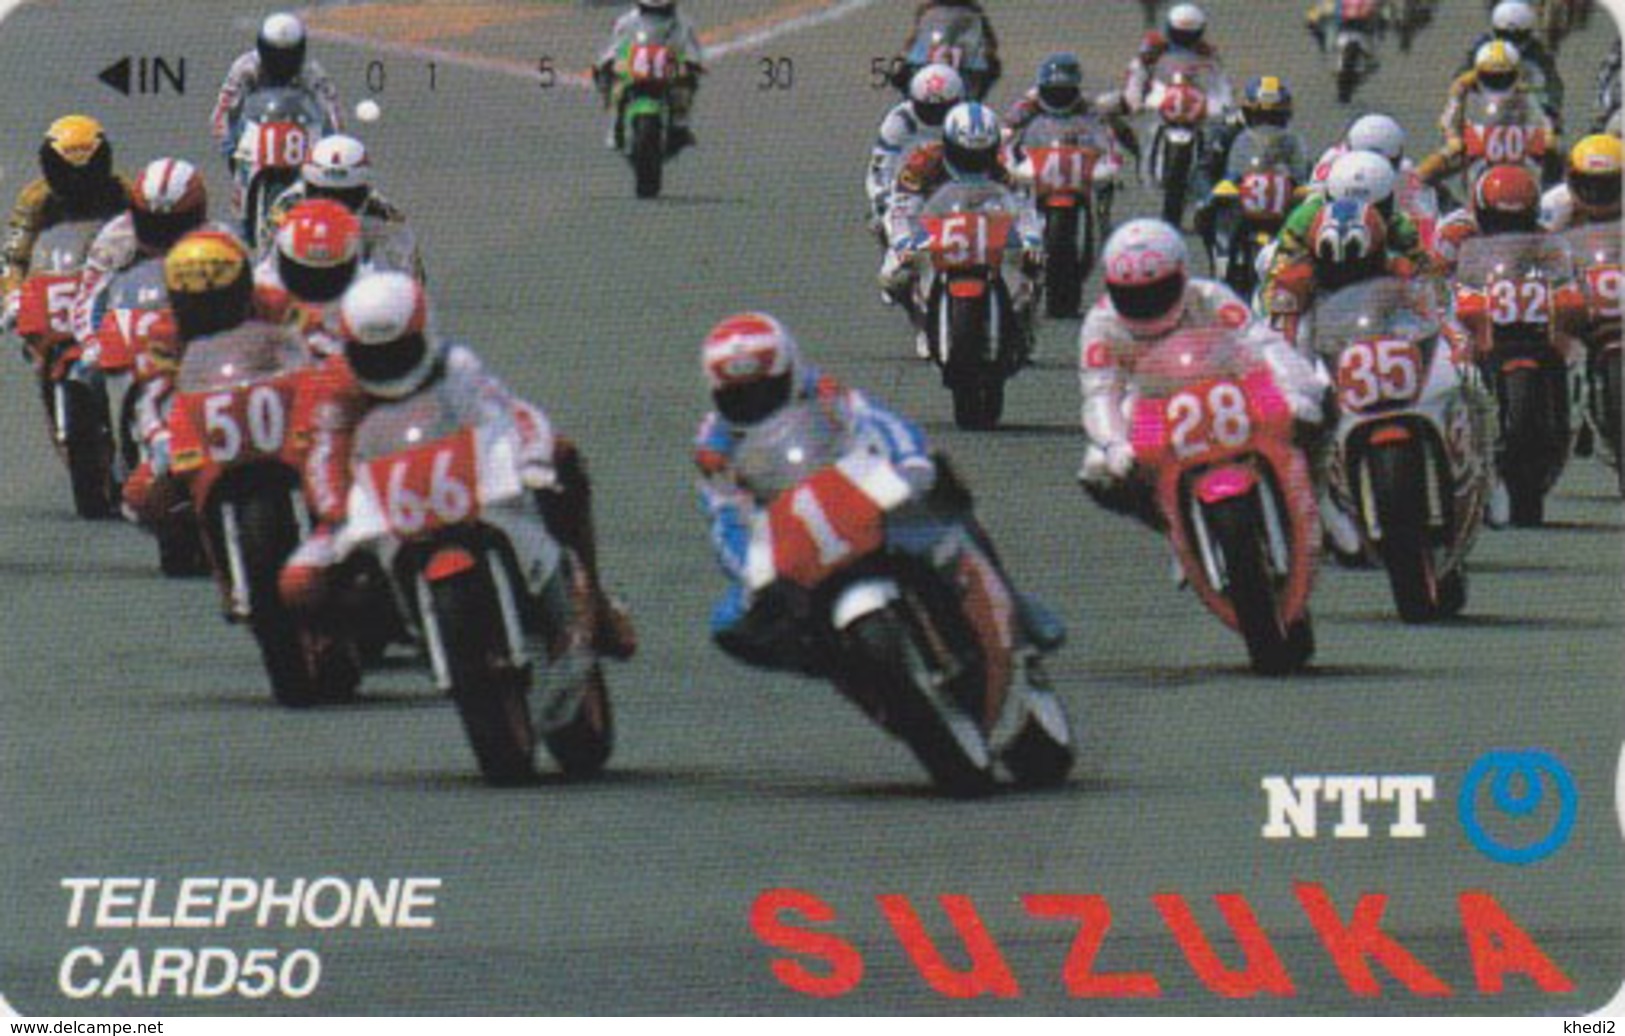 Télécarte Japon / NTT 290-038 ** ONE PUNCH ** - MOTO / SUZUKA - MOTOR BIKE RACE Japan Phonecard - Motorbikes